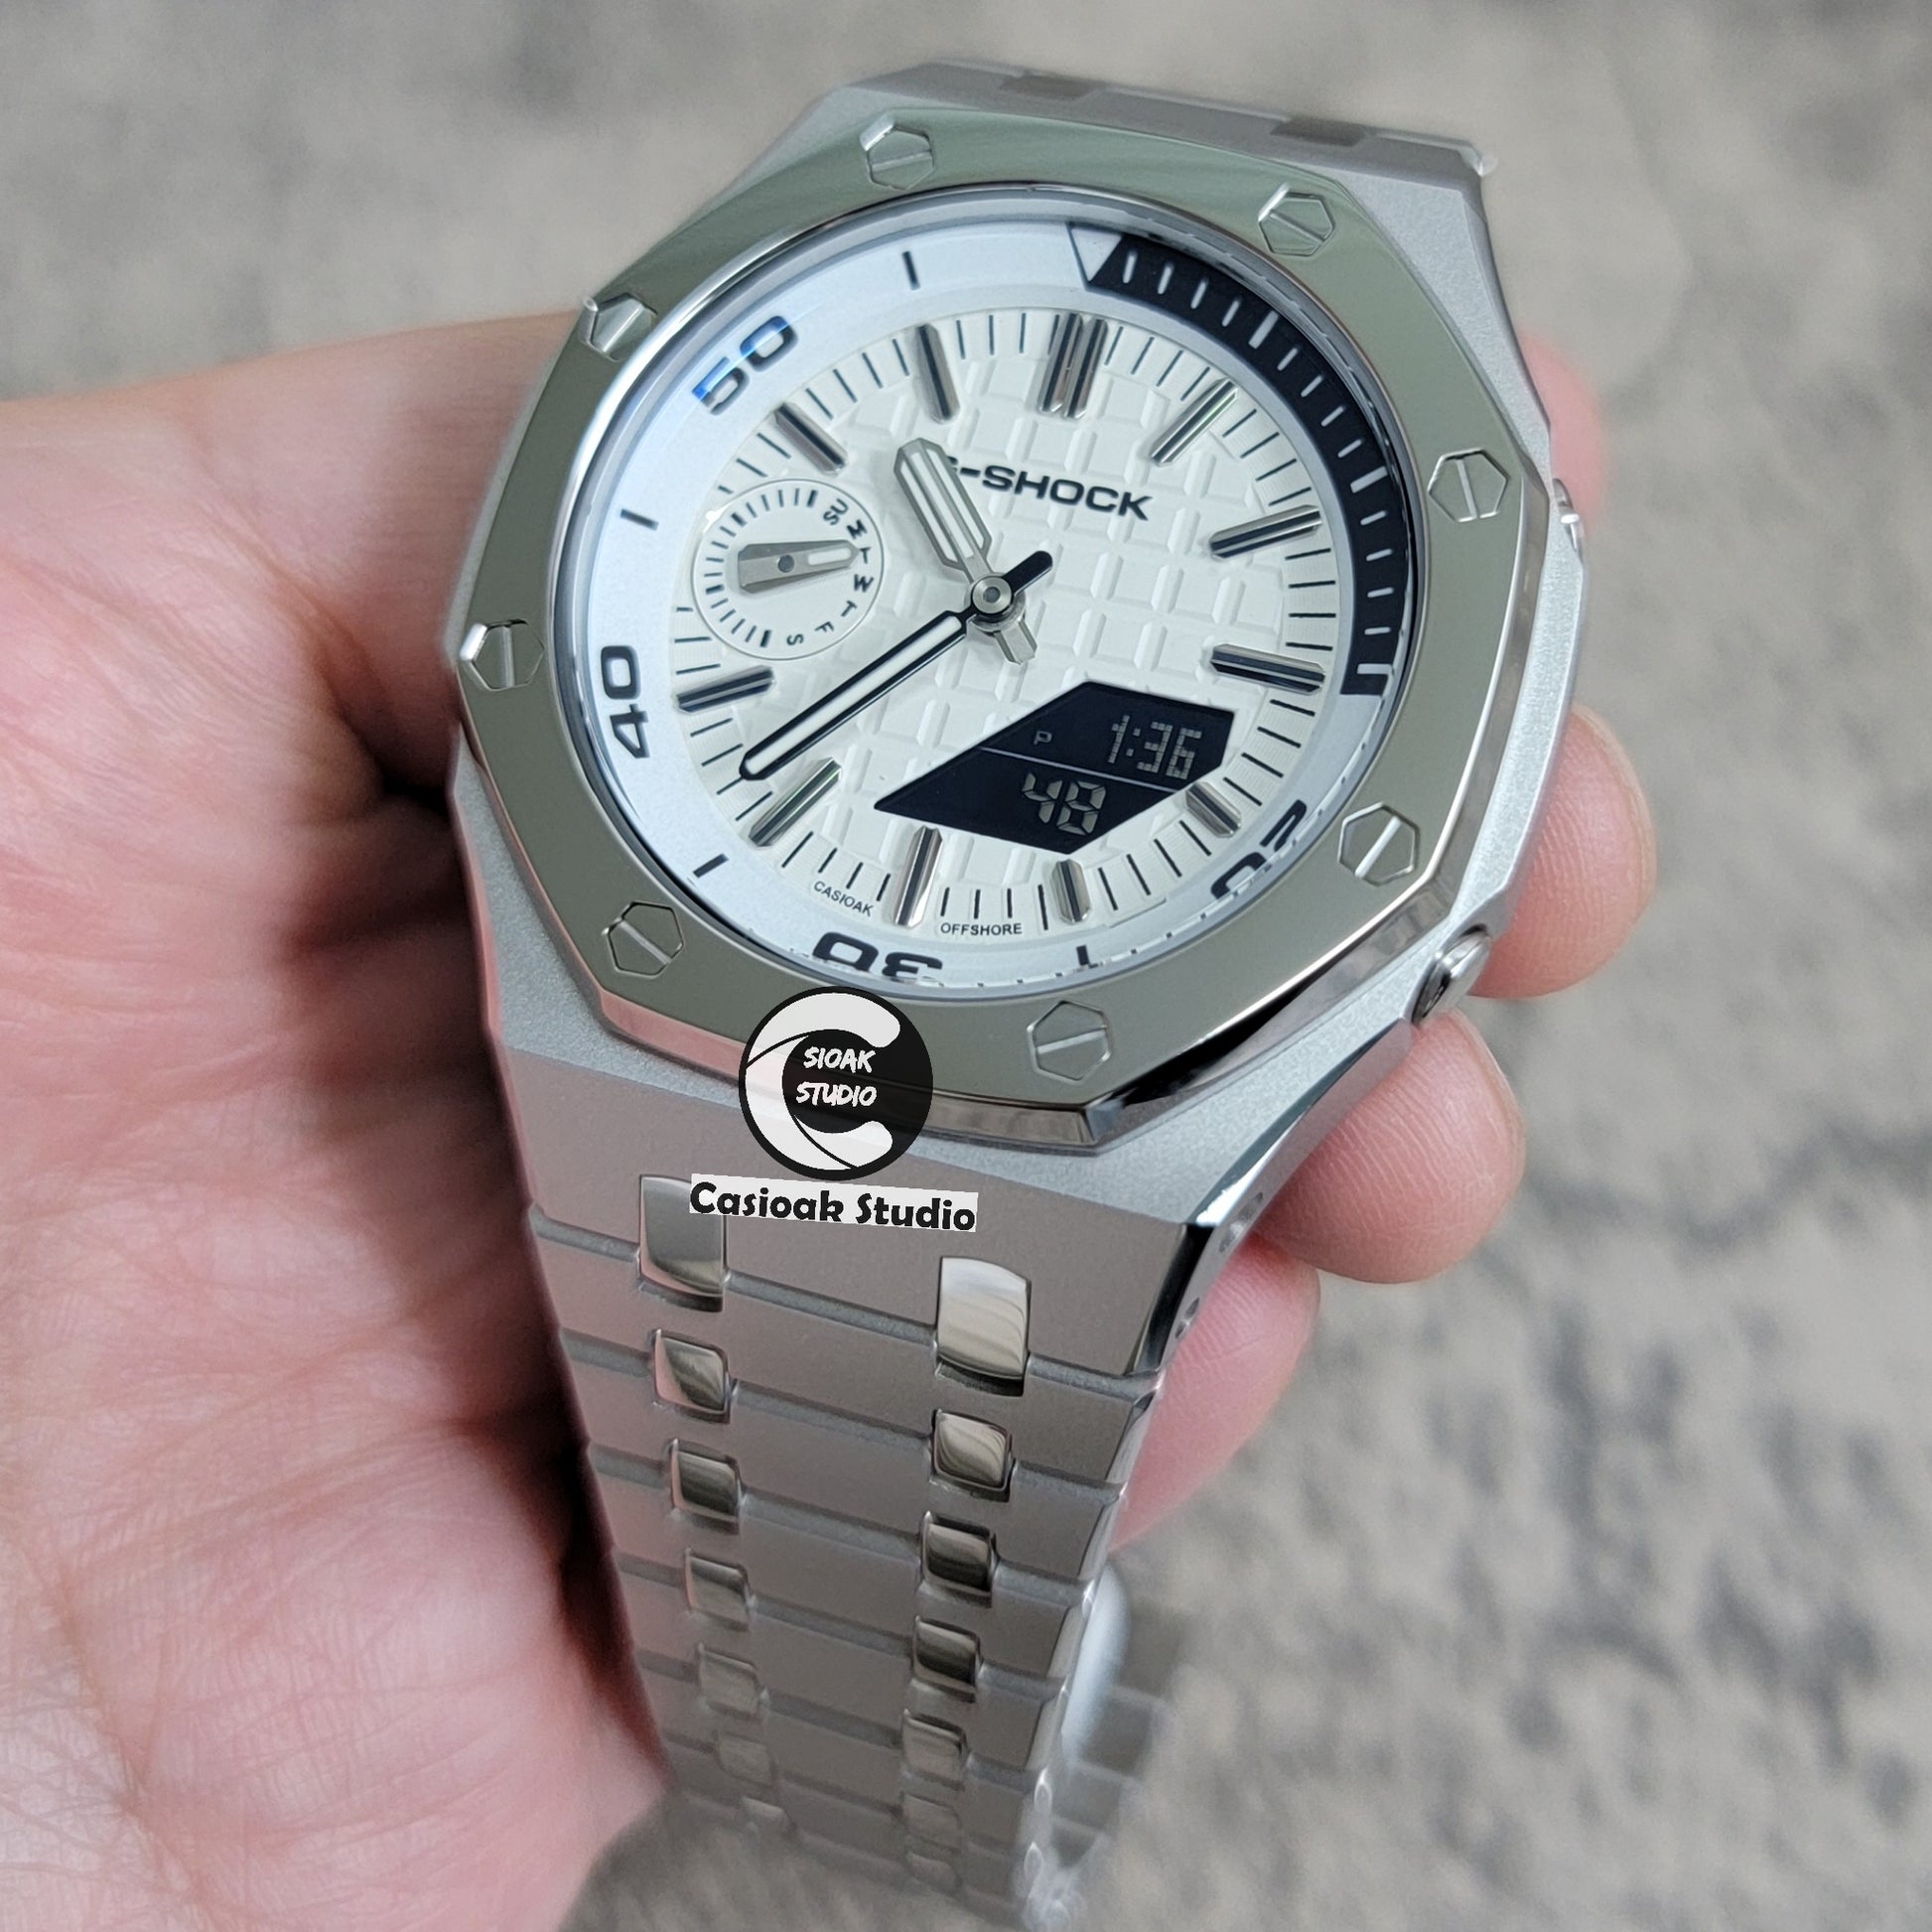 Casioak Mod Watch New Polished Silver Case Metal Strap Silver Time Mark White Dial 44mm Sapphire Glass - Casioak Studio